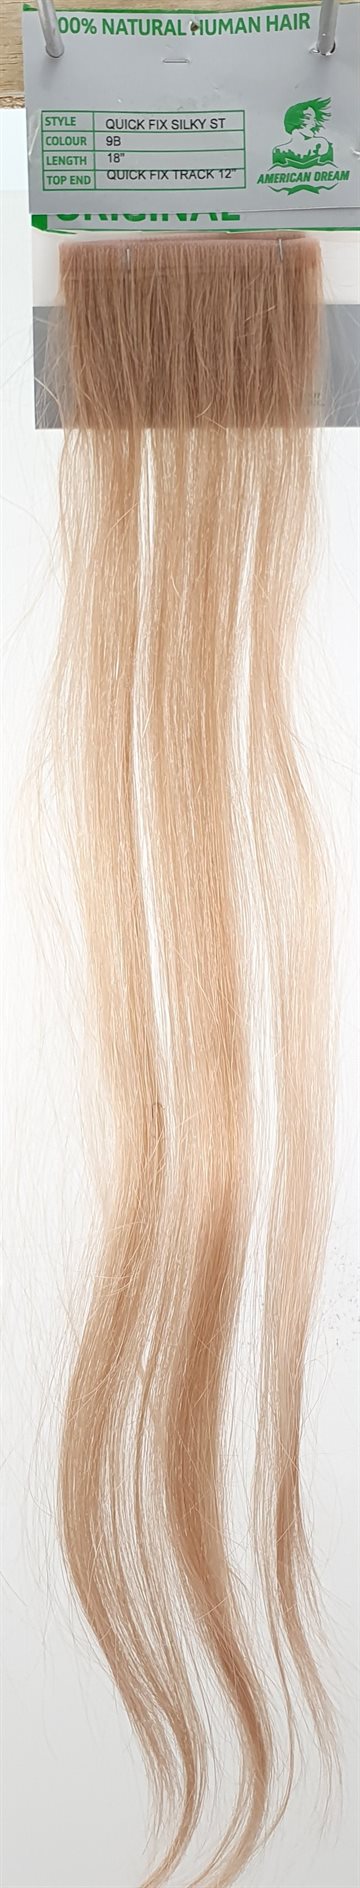 American Dream Human Hair - Skin Weft hair, color 9B - 18" (45 cm. length.)